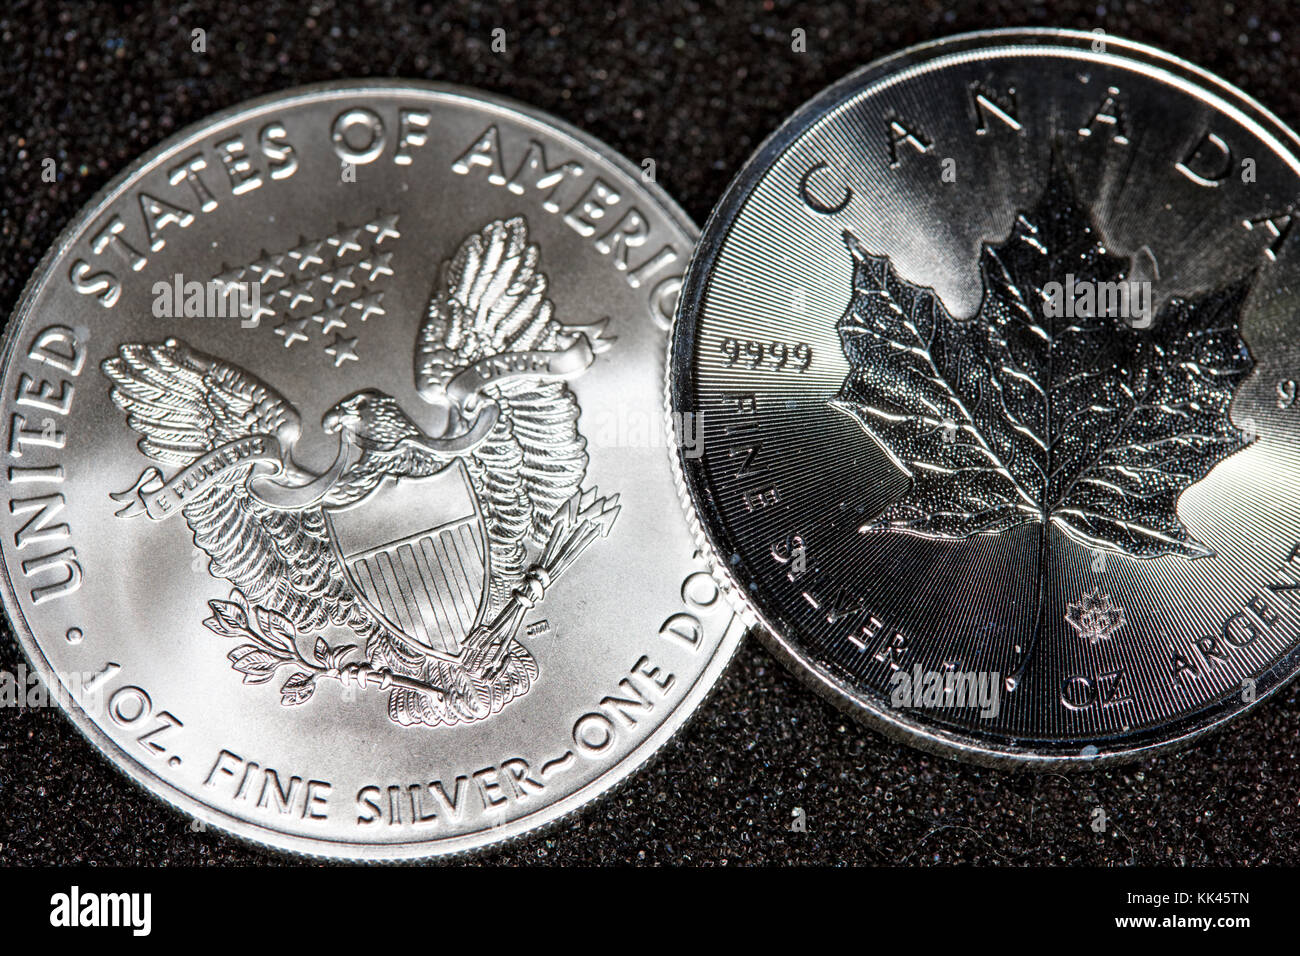 1oz silver bullion coins united states eagle and canadian maple leaf Stock Photo